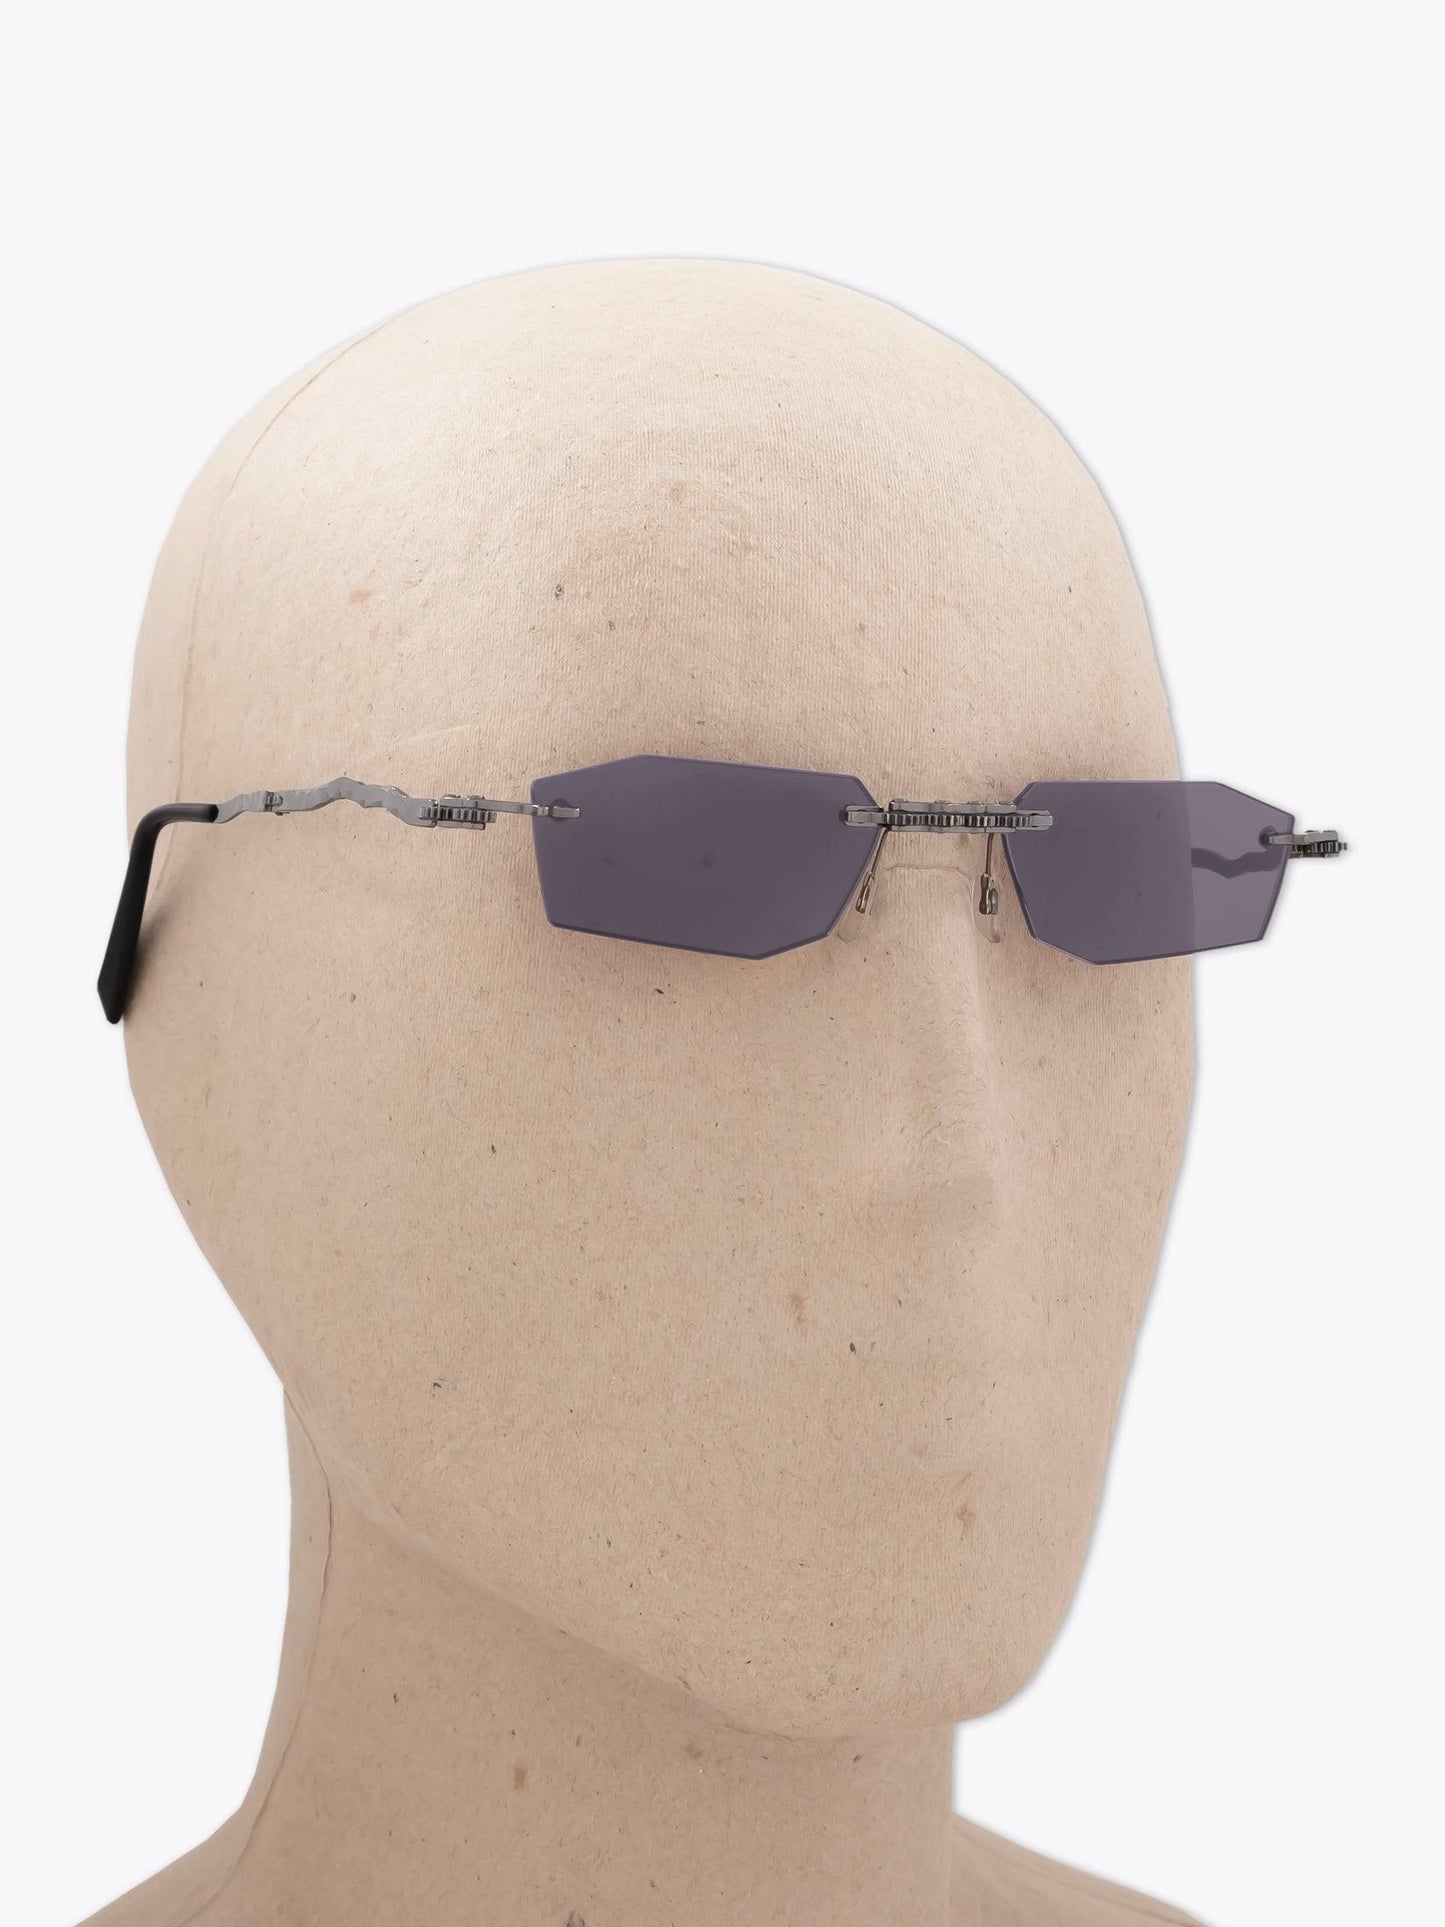 Kuboraum Mask H40 Palladium Sunglasses - APODEP.com